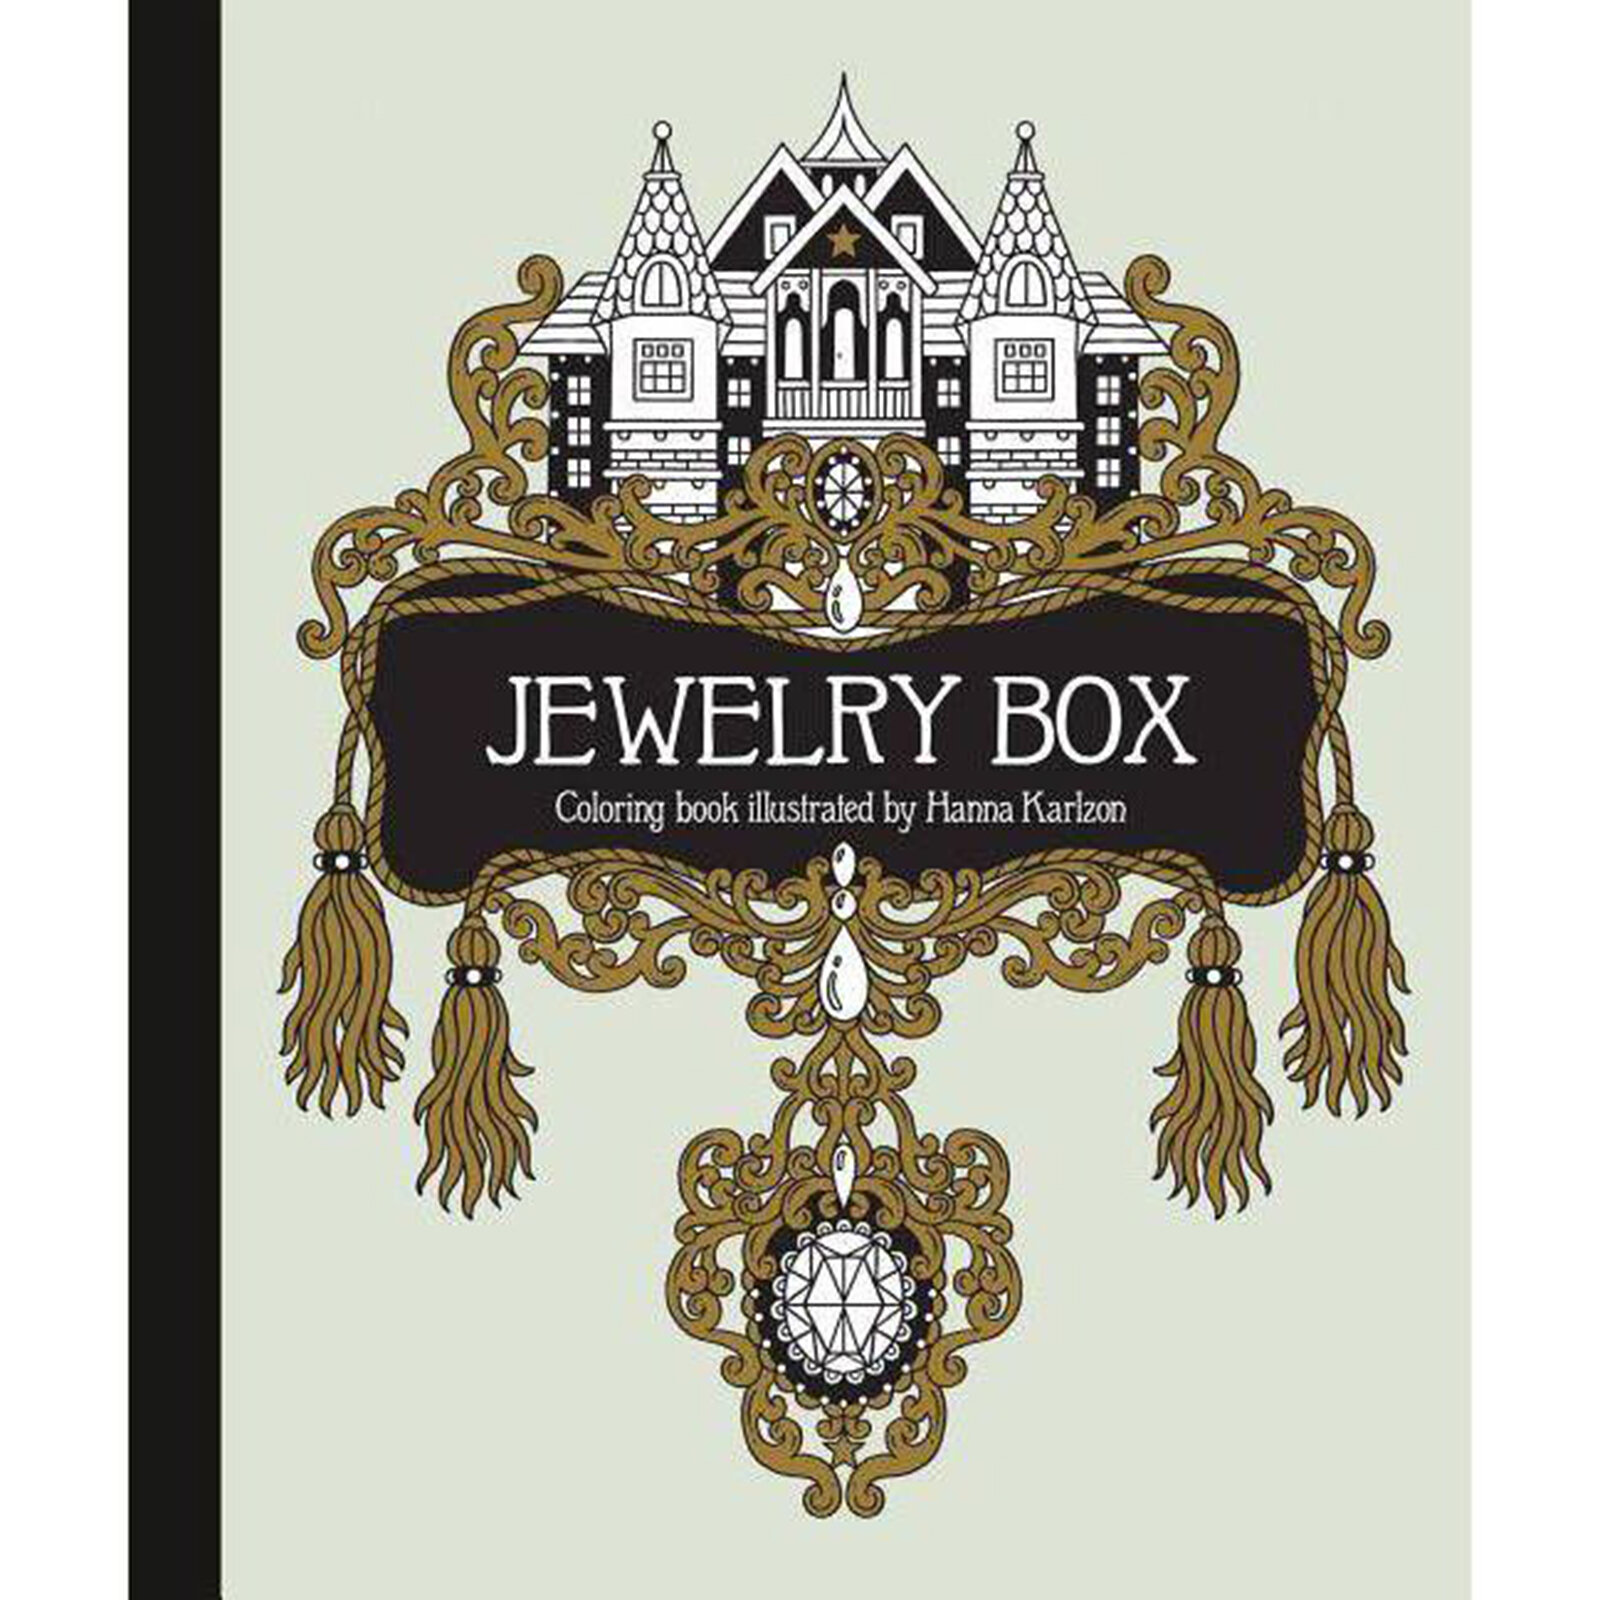 Jewelry Box Coloring Book, Hanna Karlzon, $11.99